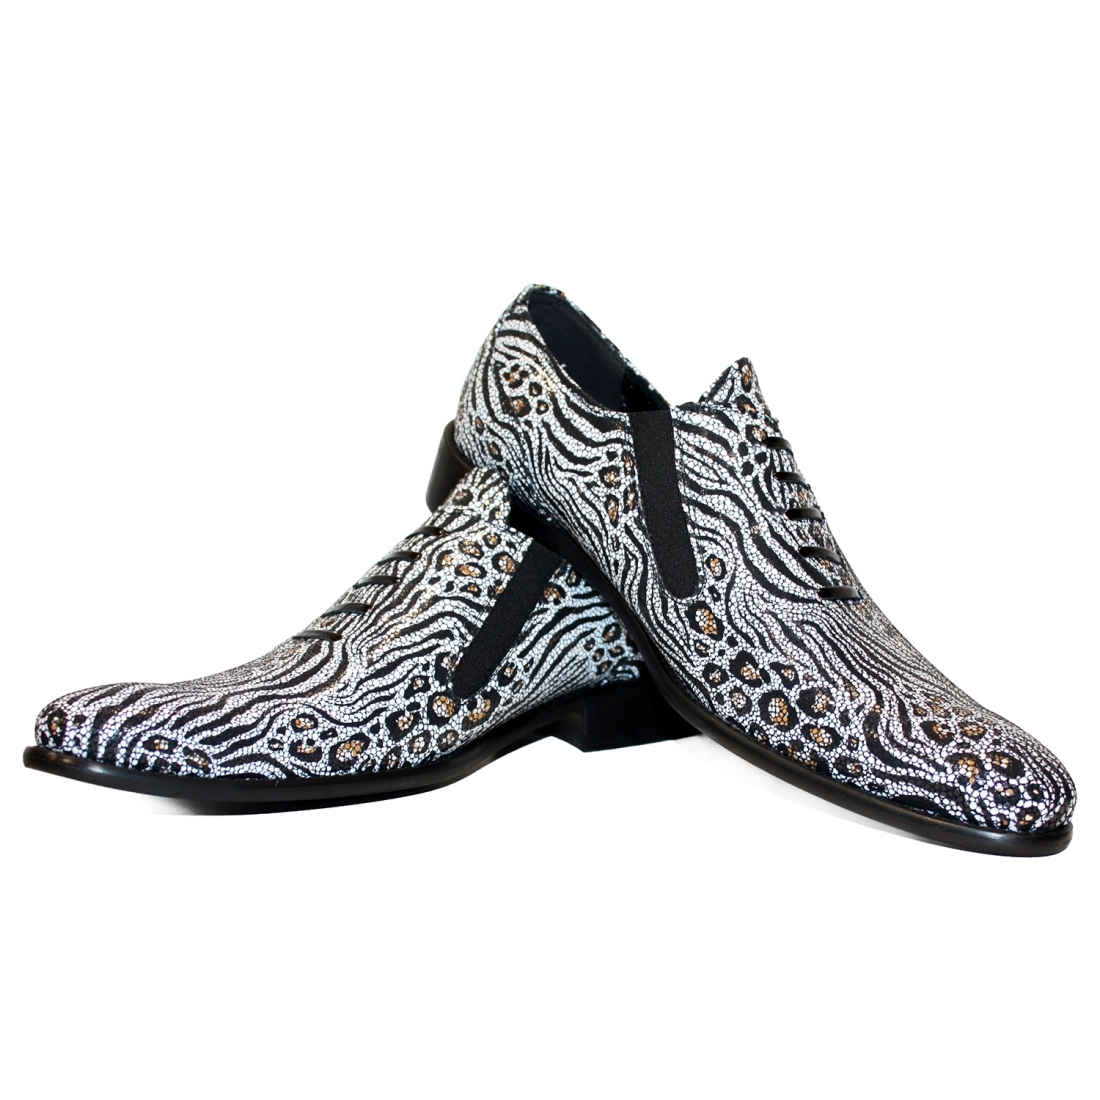 Modello Safarro - Loafers & Slip-Ons - Handmade Colorful Italian Leather Shoes